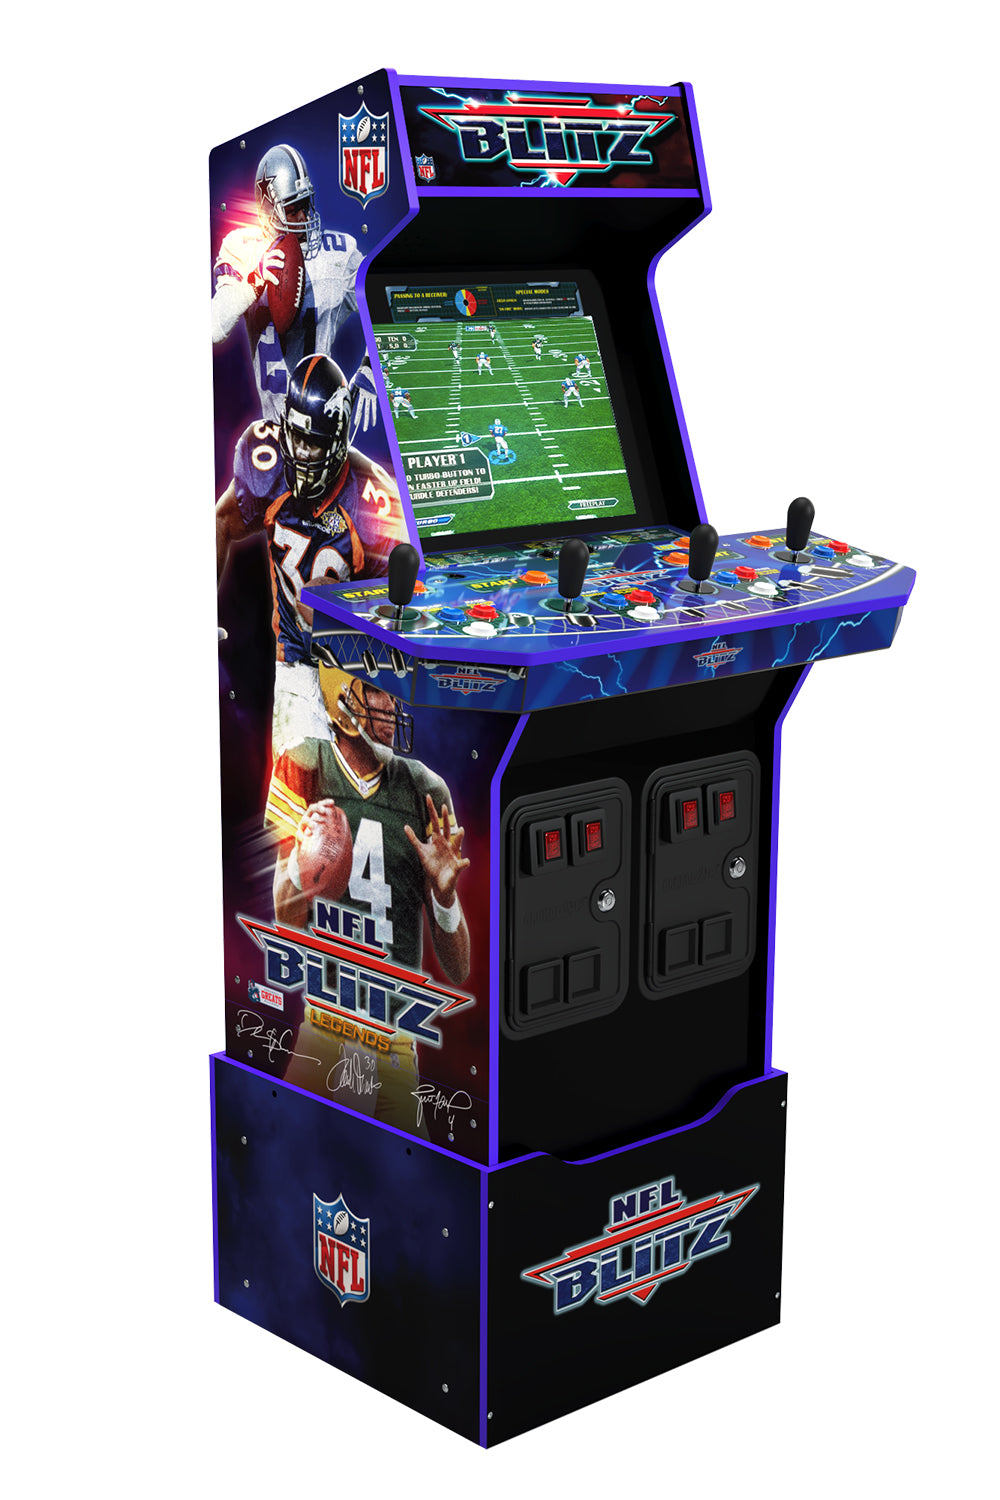 NFL Blitz Legends Arcade Game